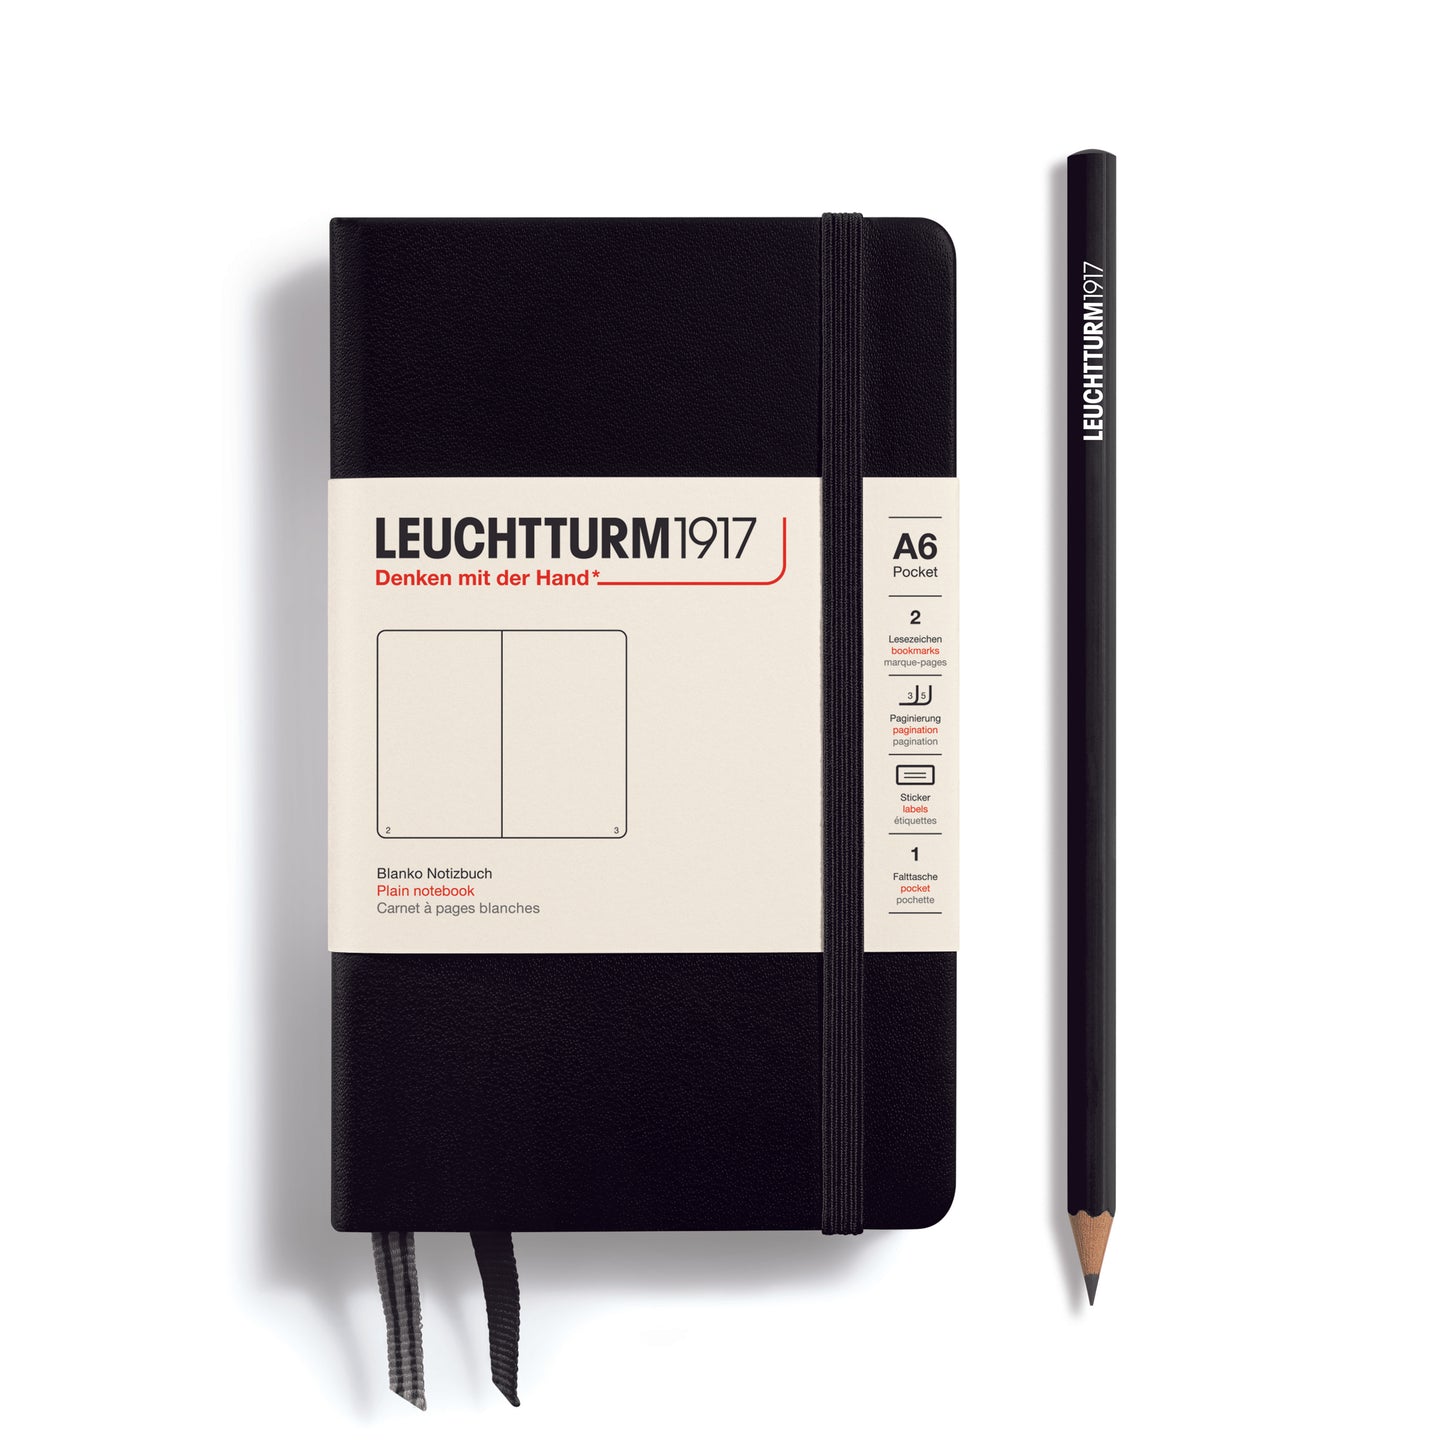 Pocket A6 Plain Hardcover Notebook